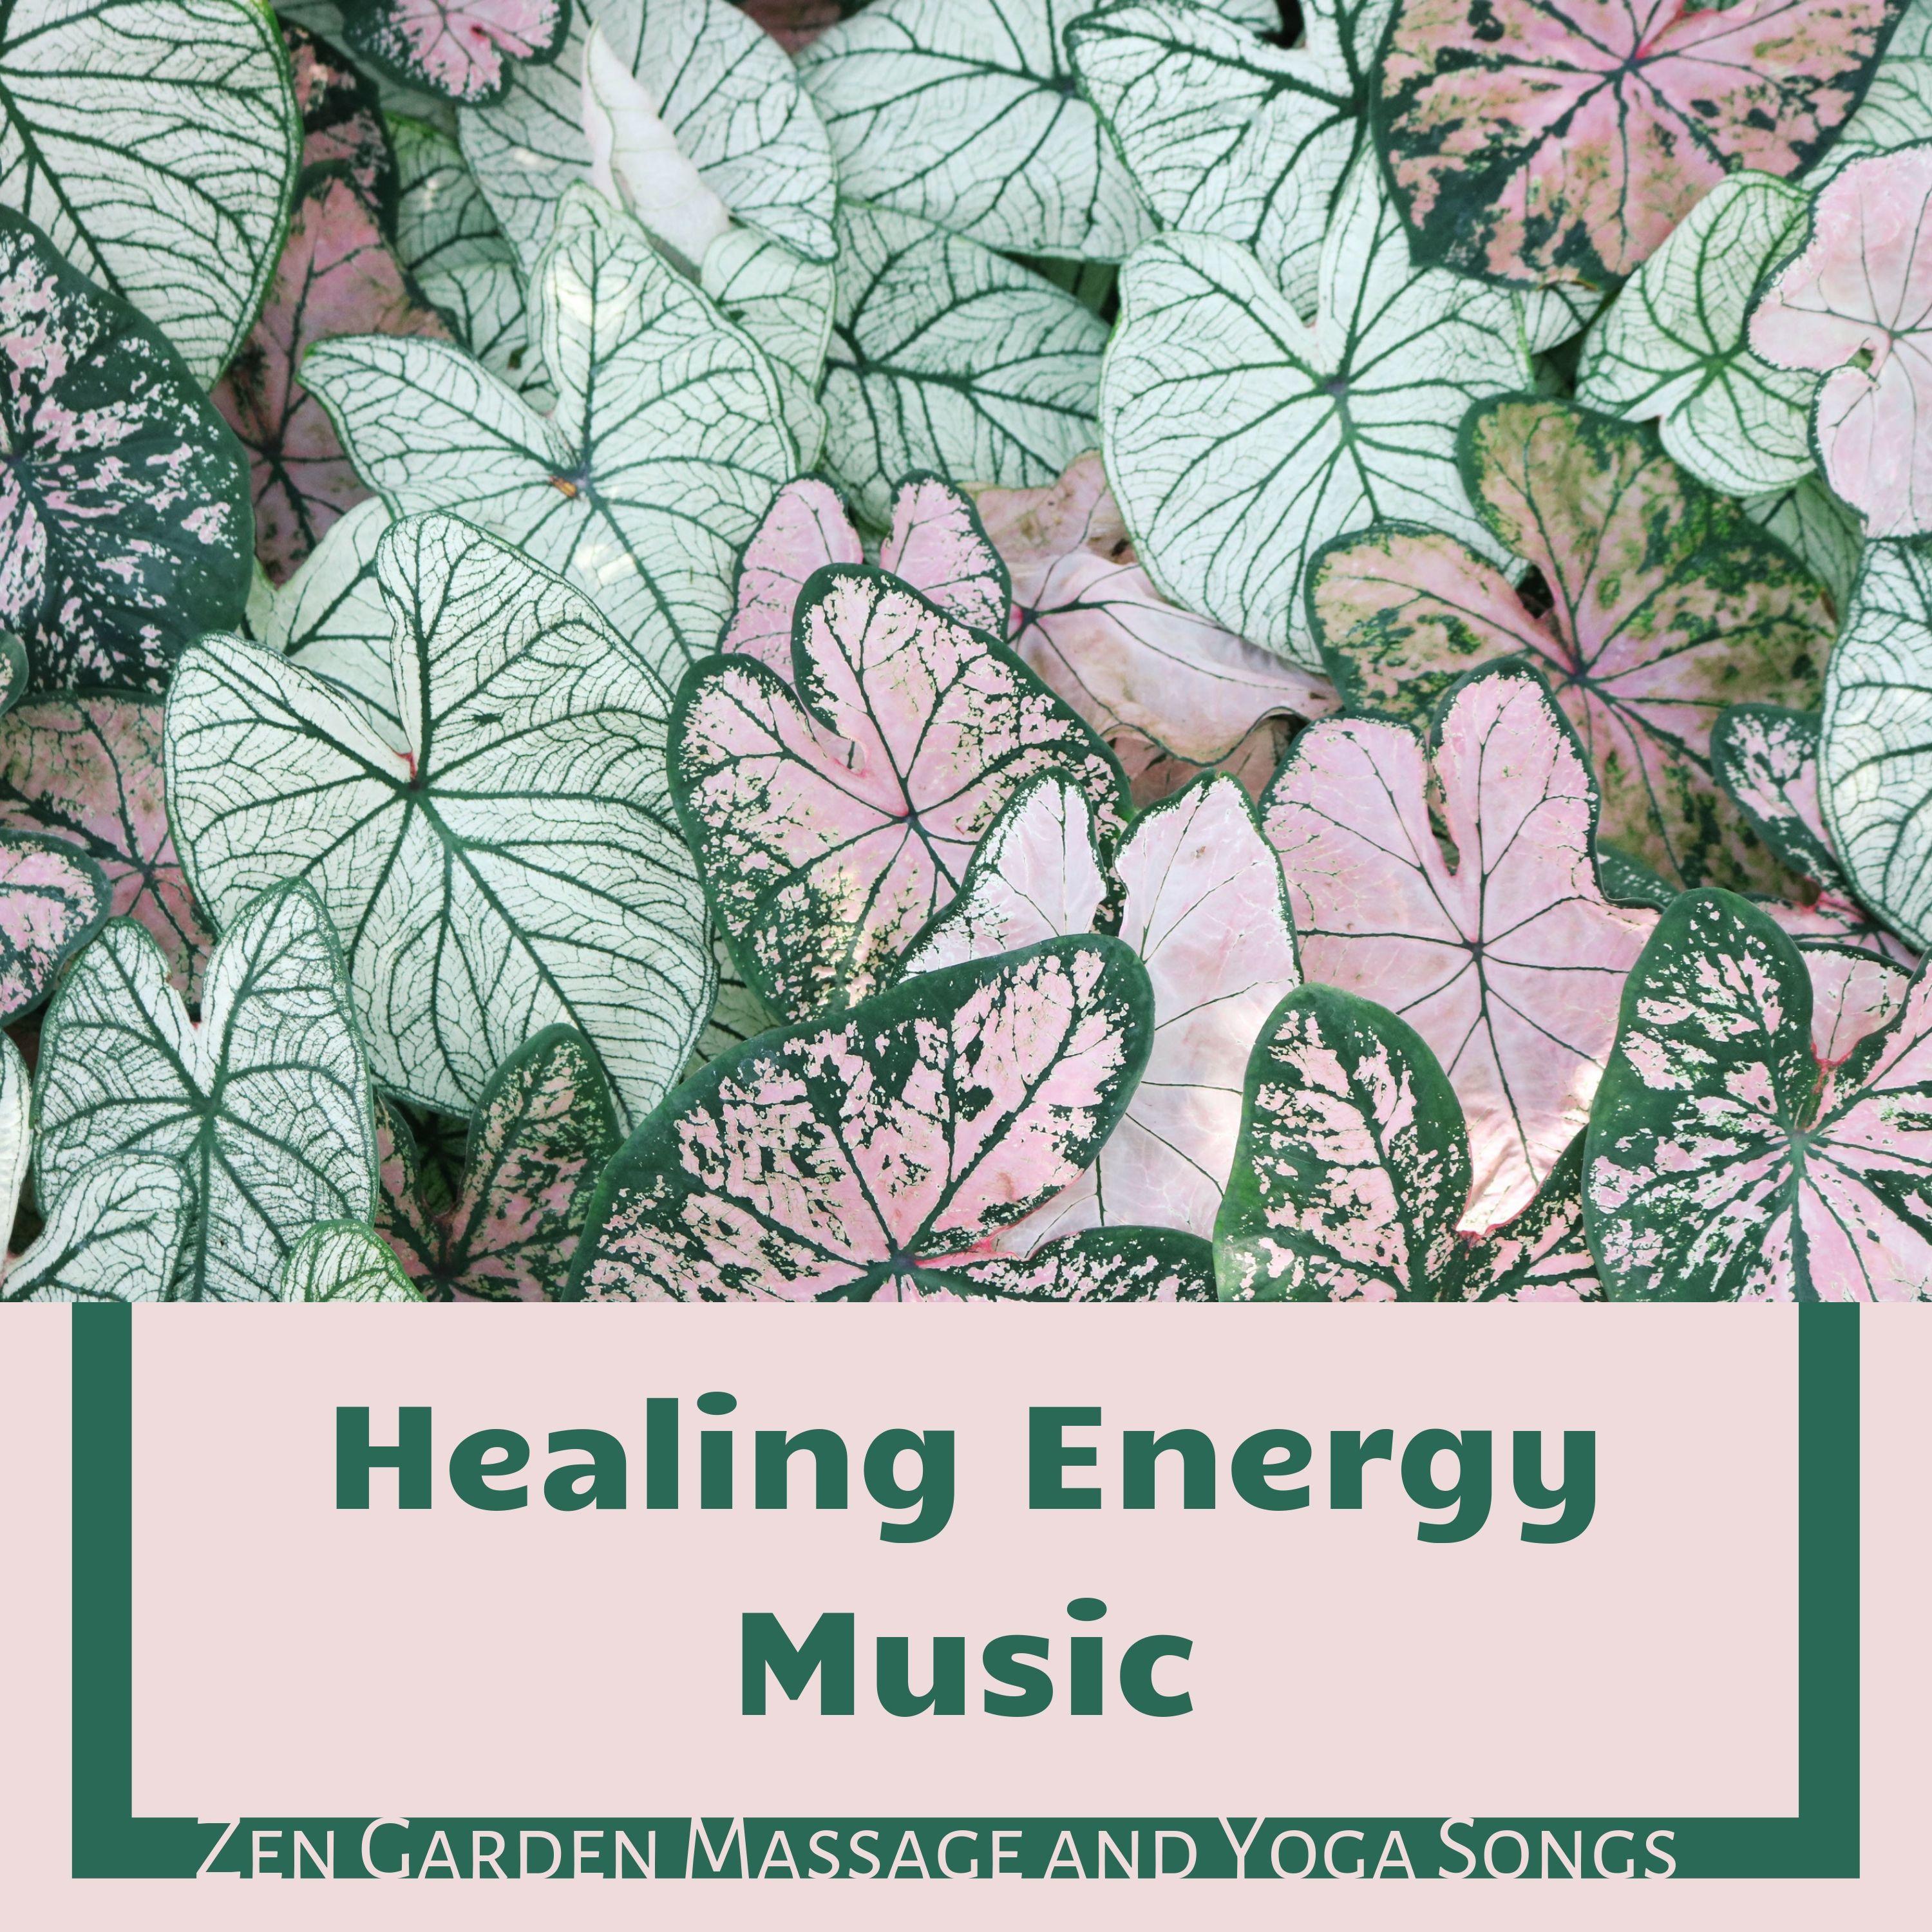 Healing Energy Music - Zen Garden Massage and Yoga Songs